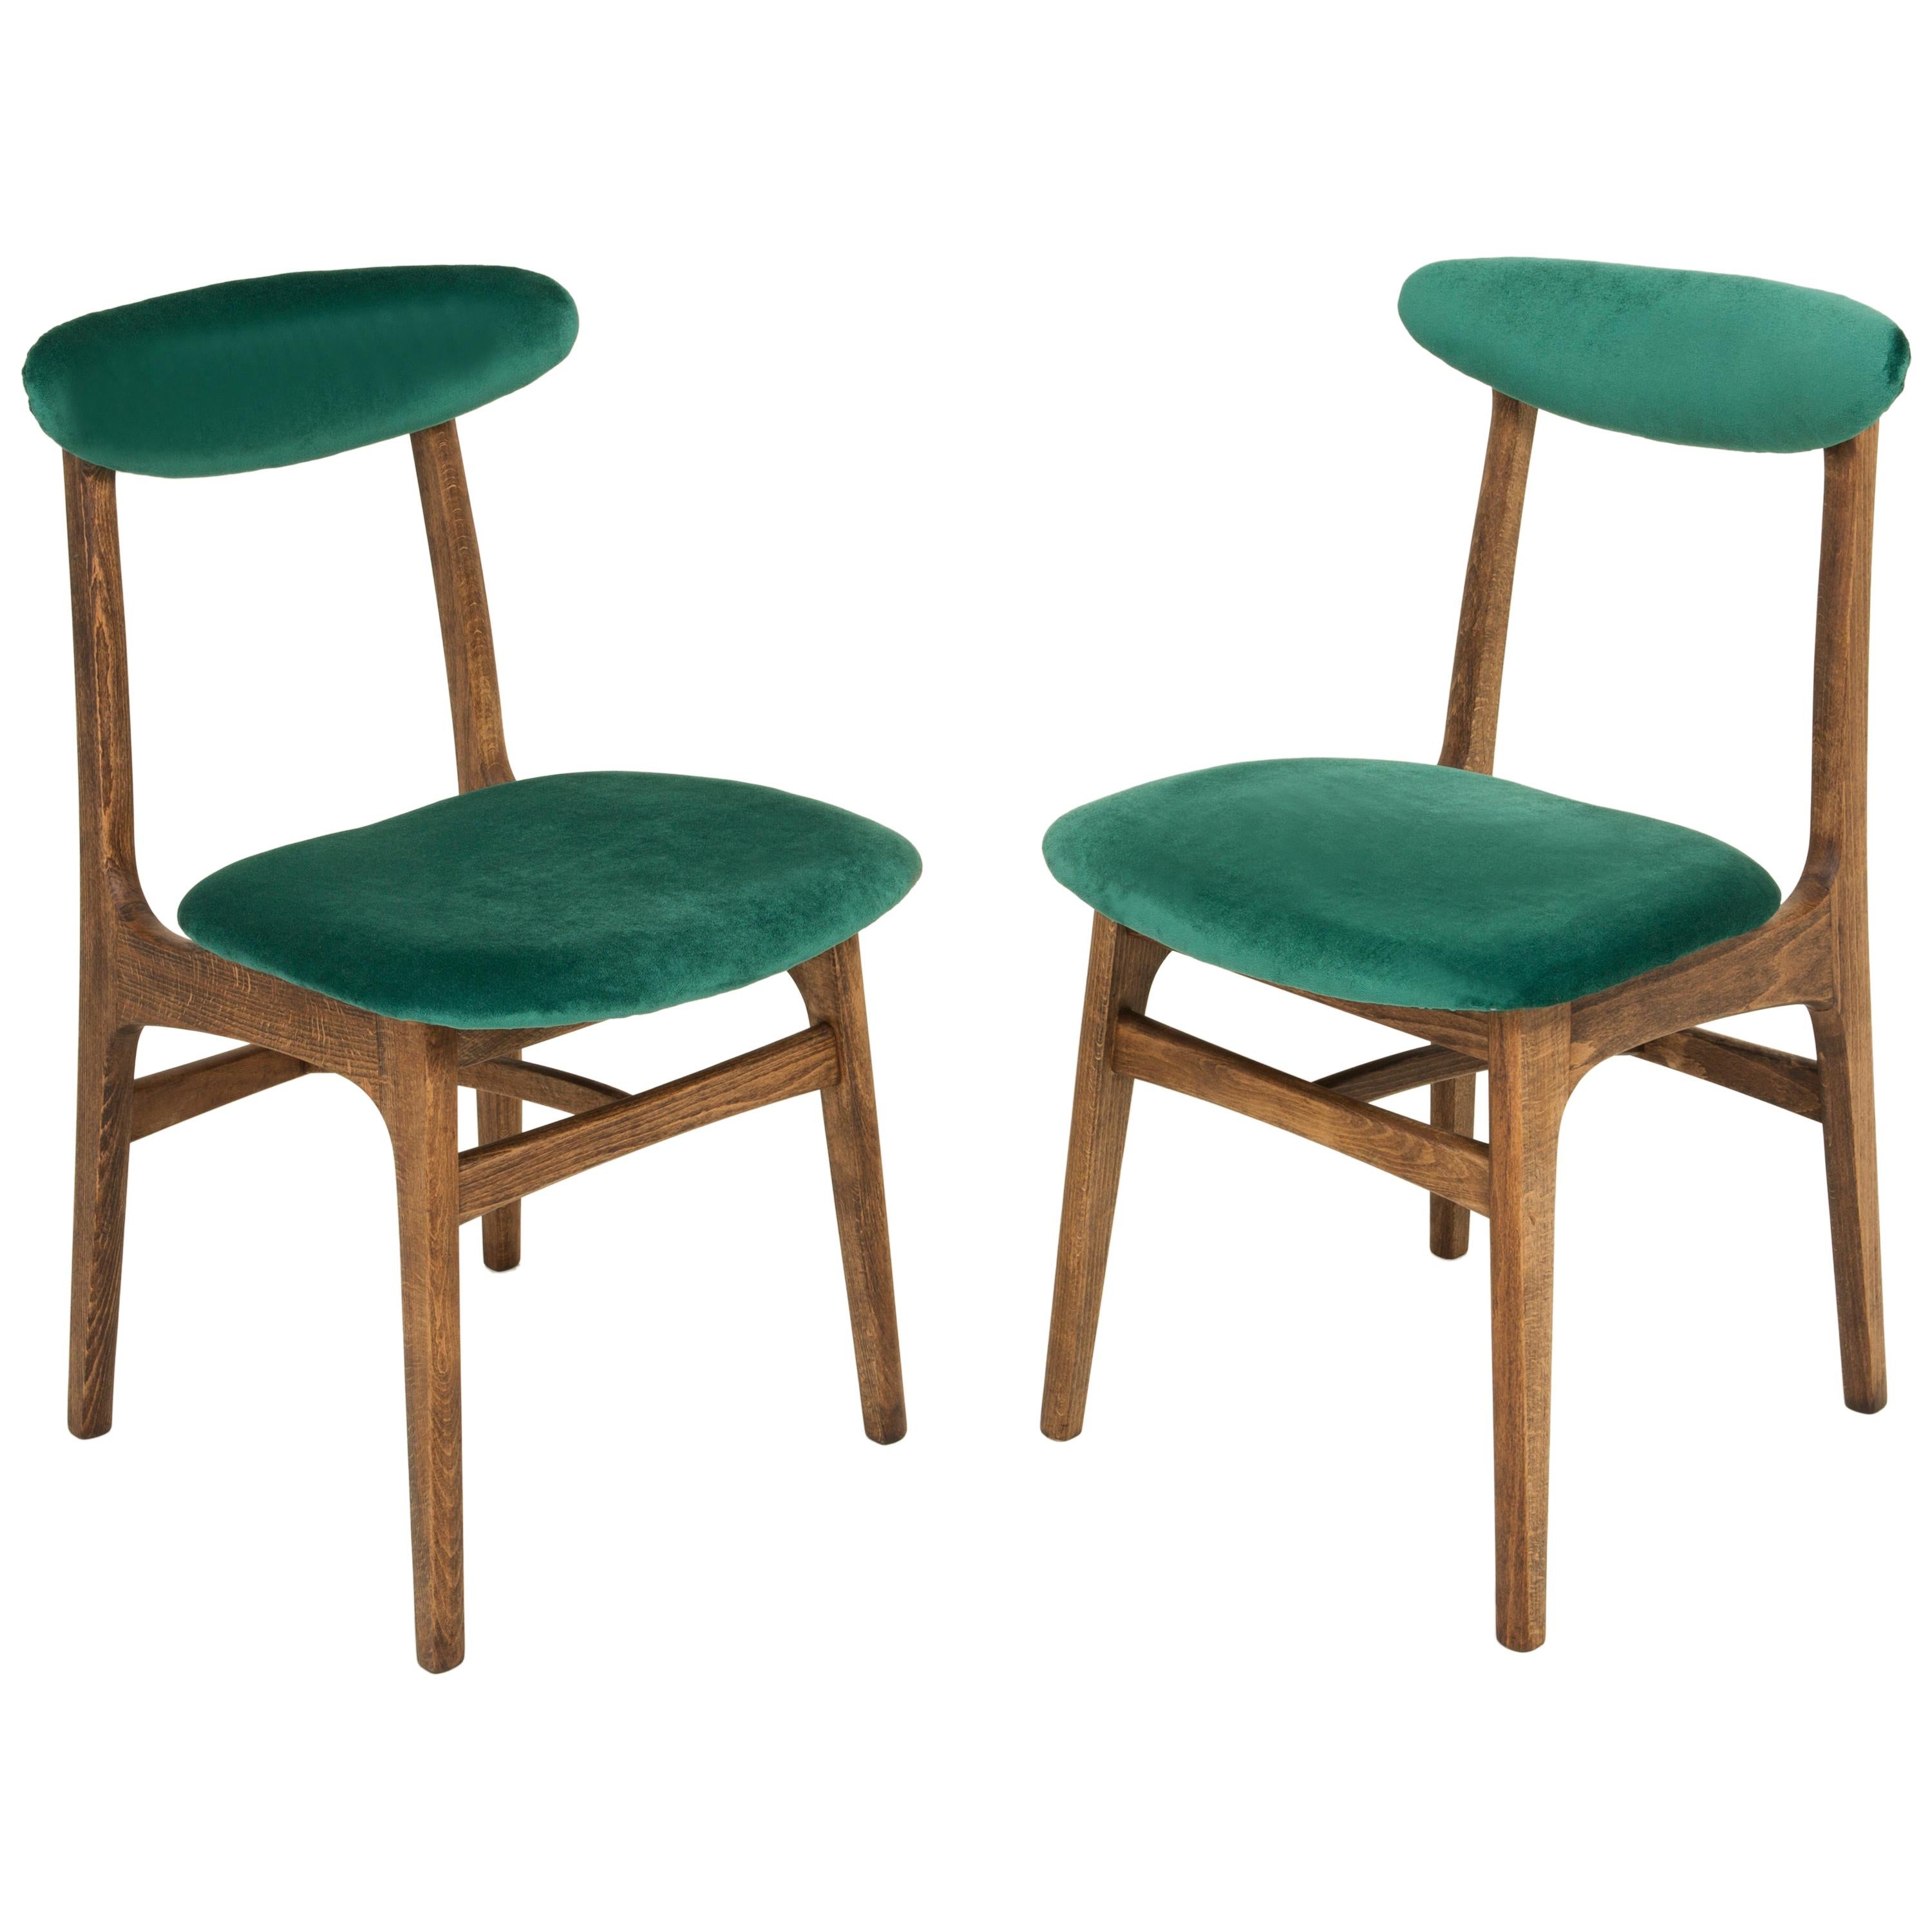 Set of Two 20th Century Dark Green Rajmund Halas Chairs, Europe, 1960s.